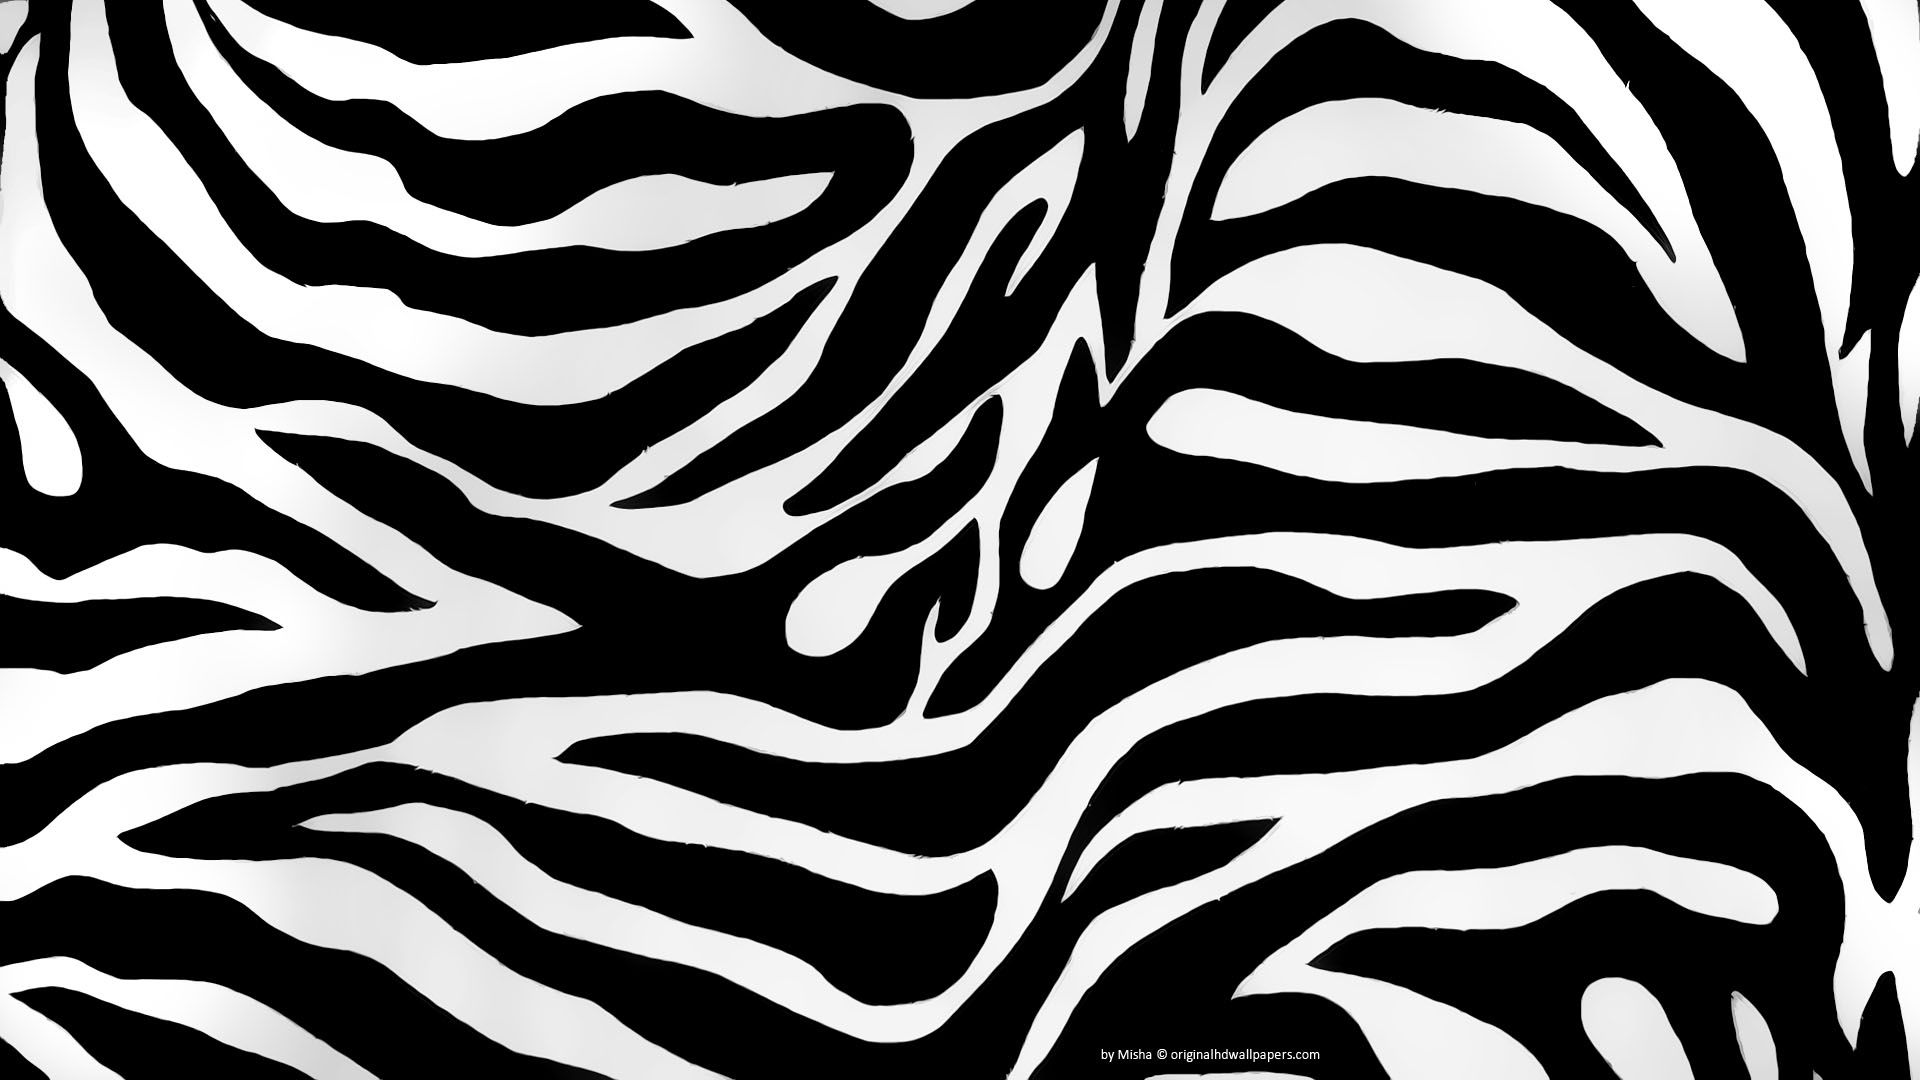 Zebra Print Wallpaper ideas. Animal print wallpaper, Zebra print wallpaper, Animal print